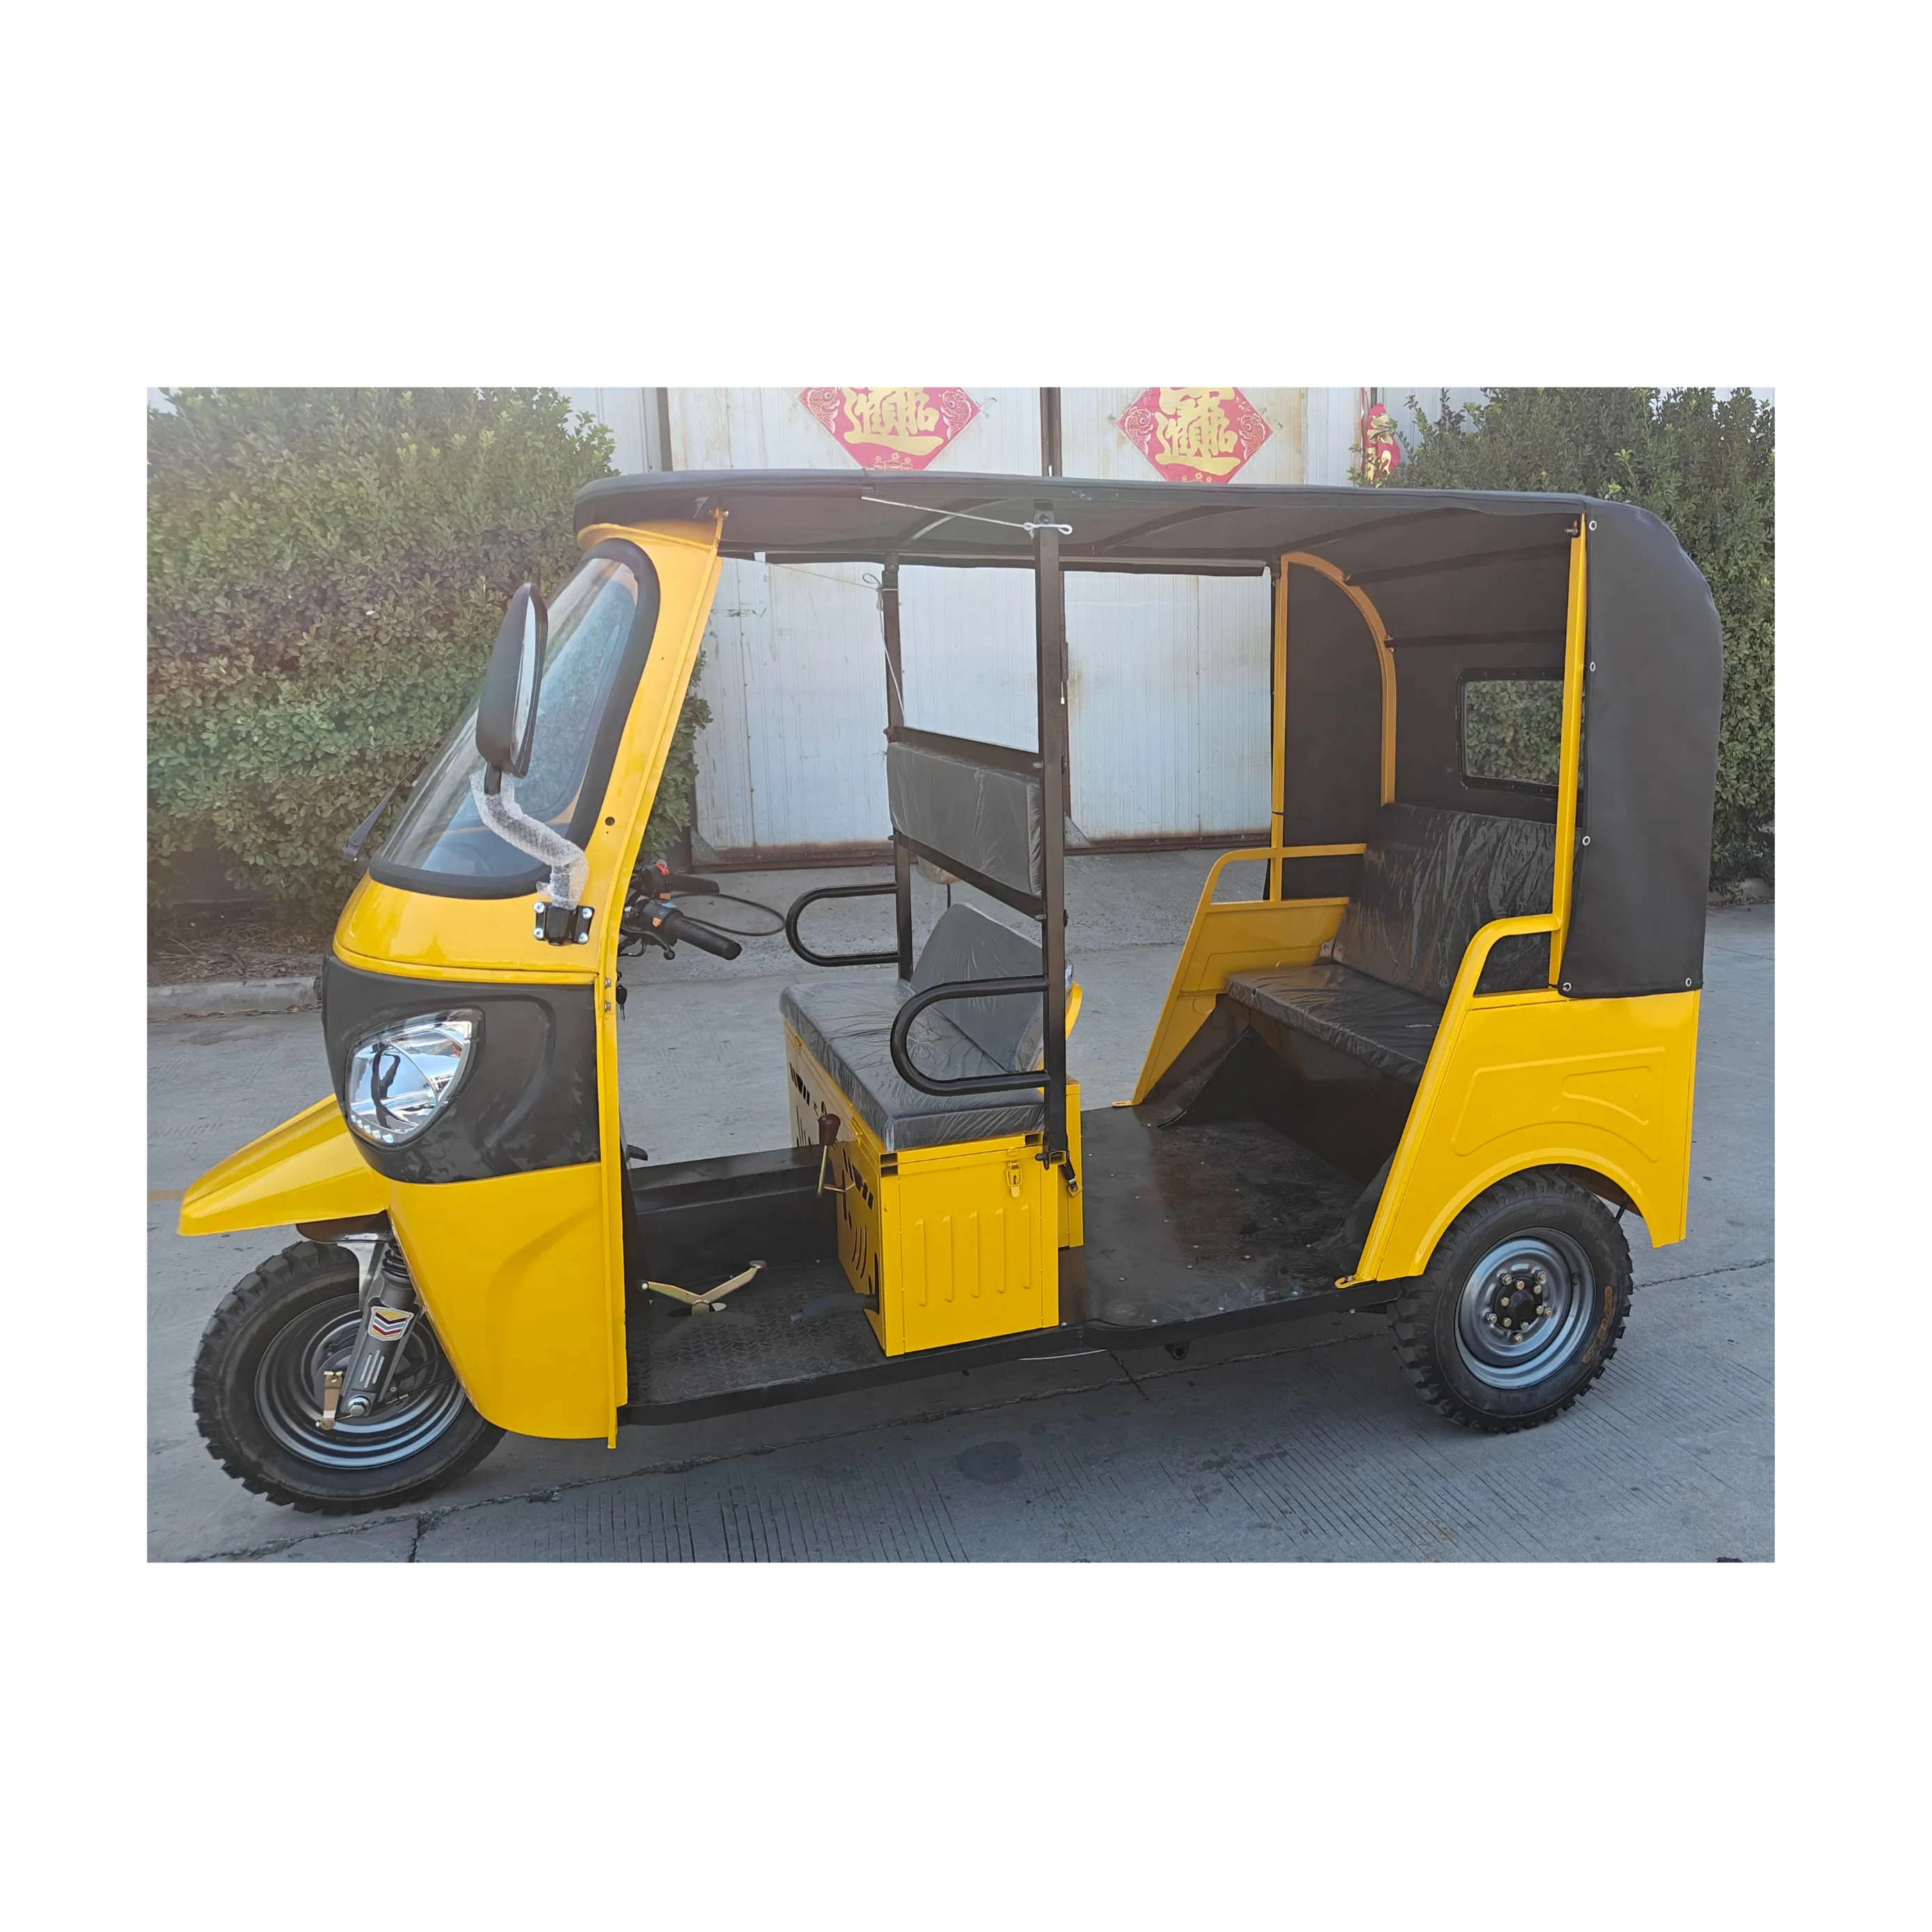 3 Wheeler Gasoline Rickshaw Vehicle China Tricycle Cargo For Passenger Used Cars